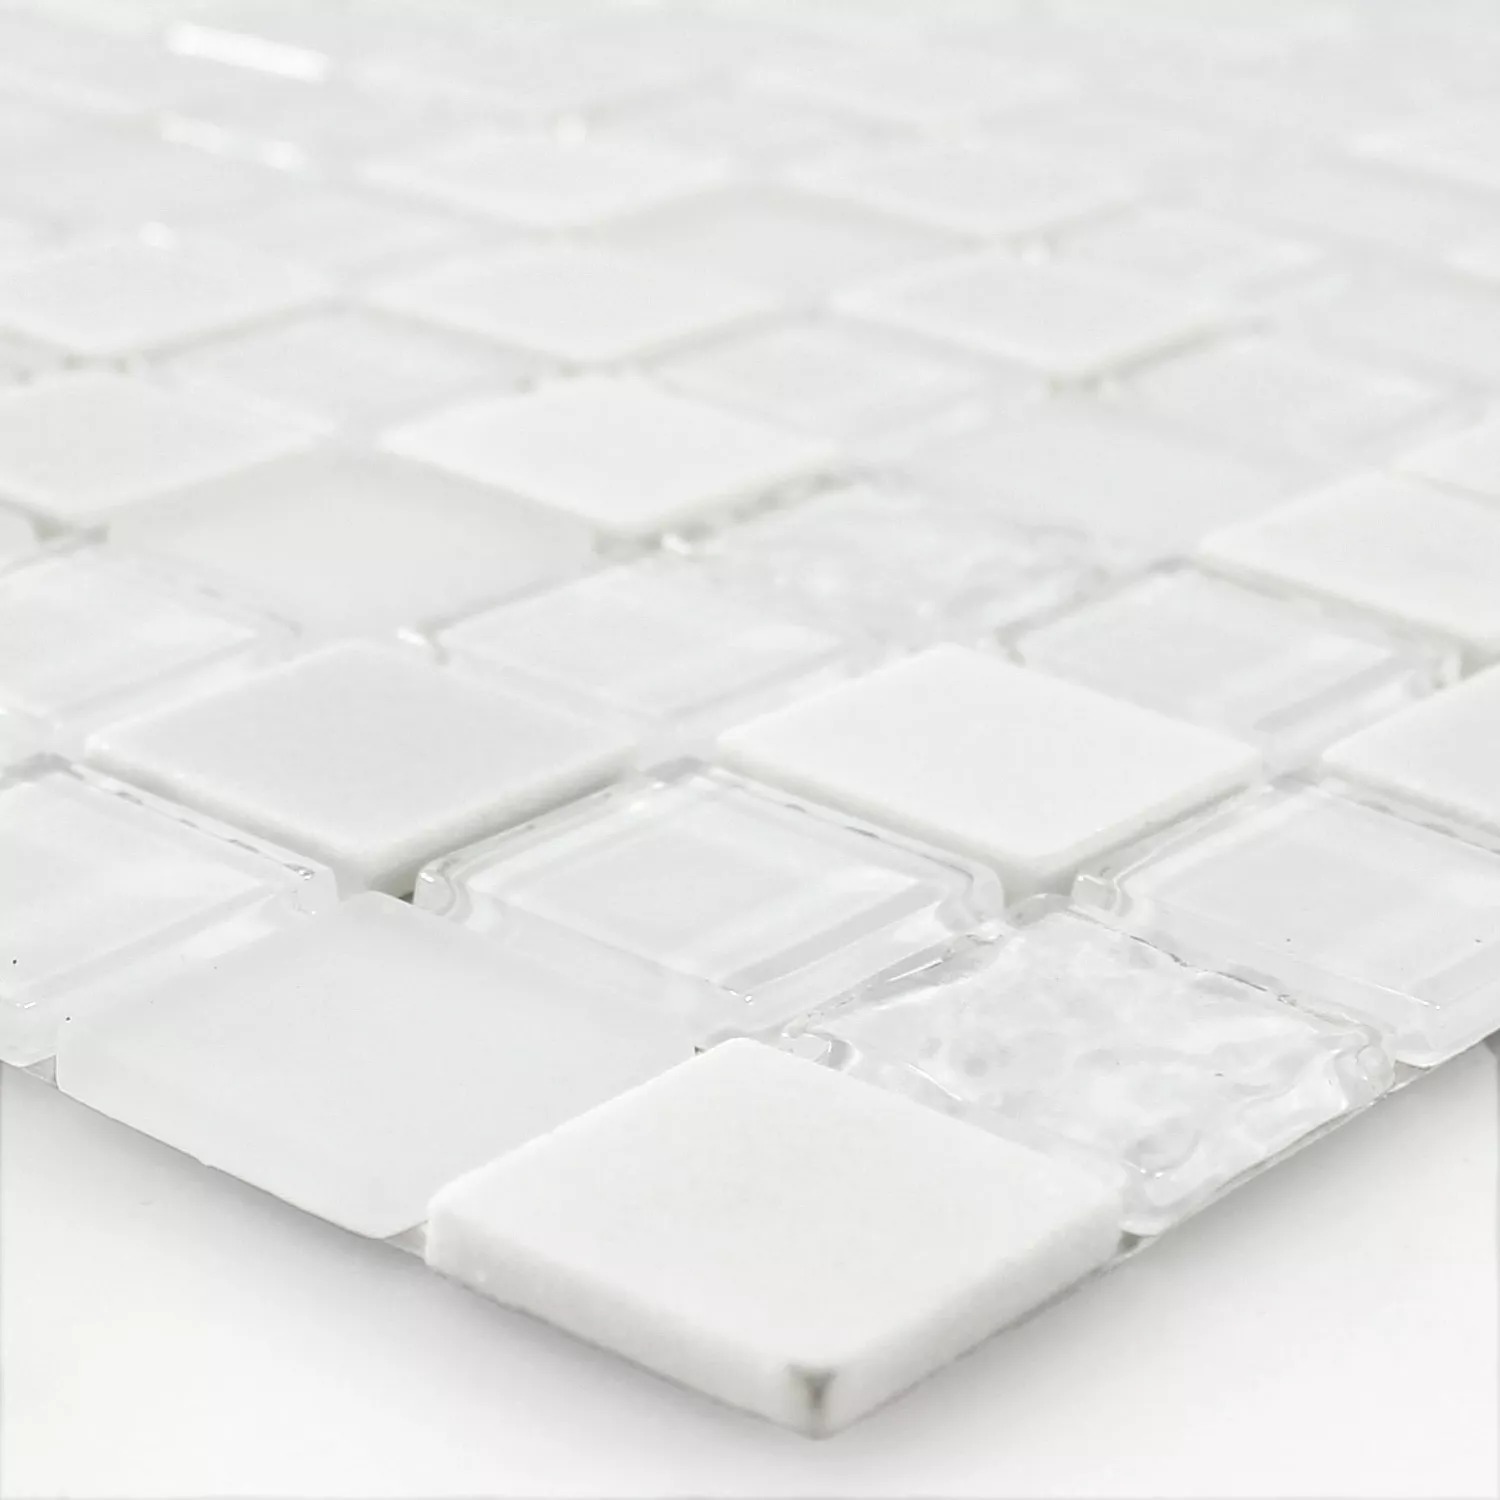 Autoadesivoe Mosaico Pietra Naturale Vetro Mix Bianco